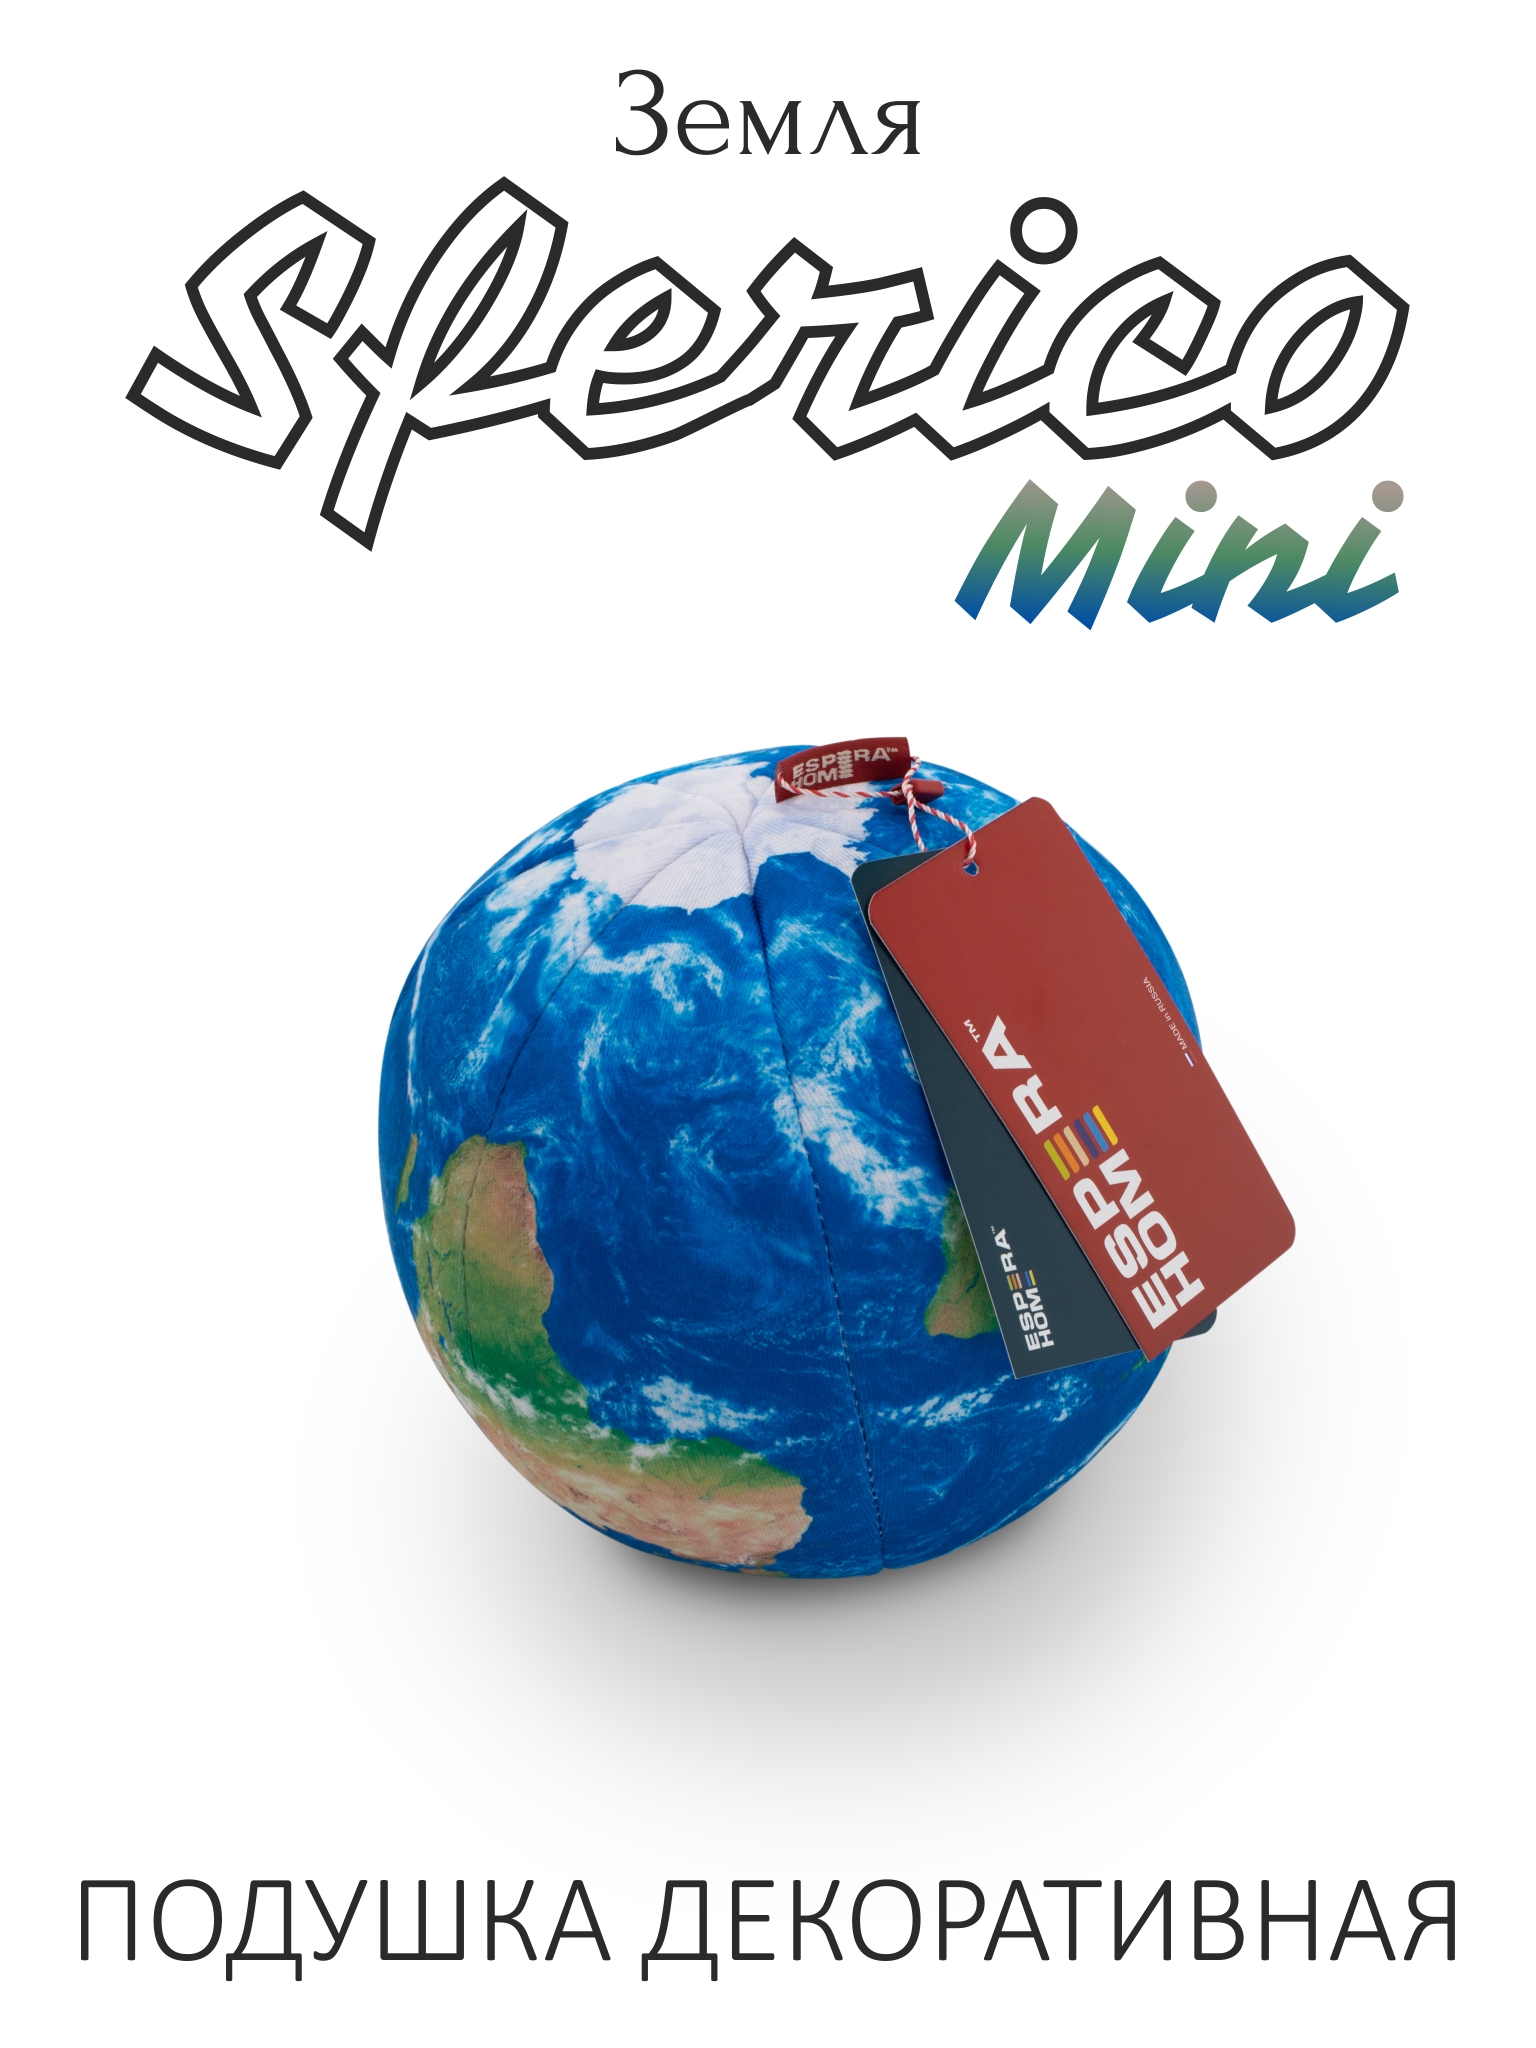 Декоративная подушка-игрушка шар • Sferico Mini / Сферико Мини • Земля (серия планеты)